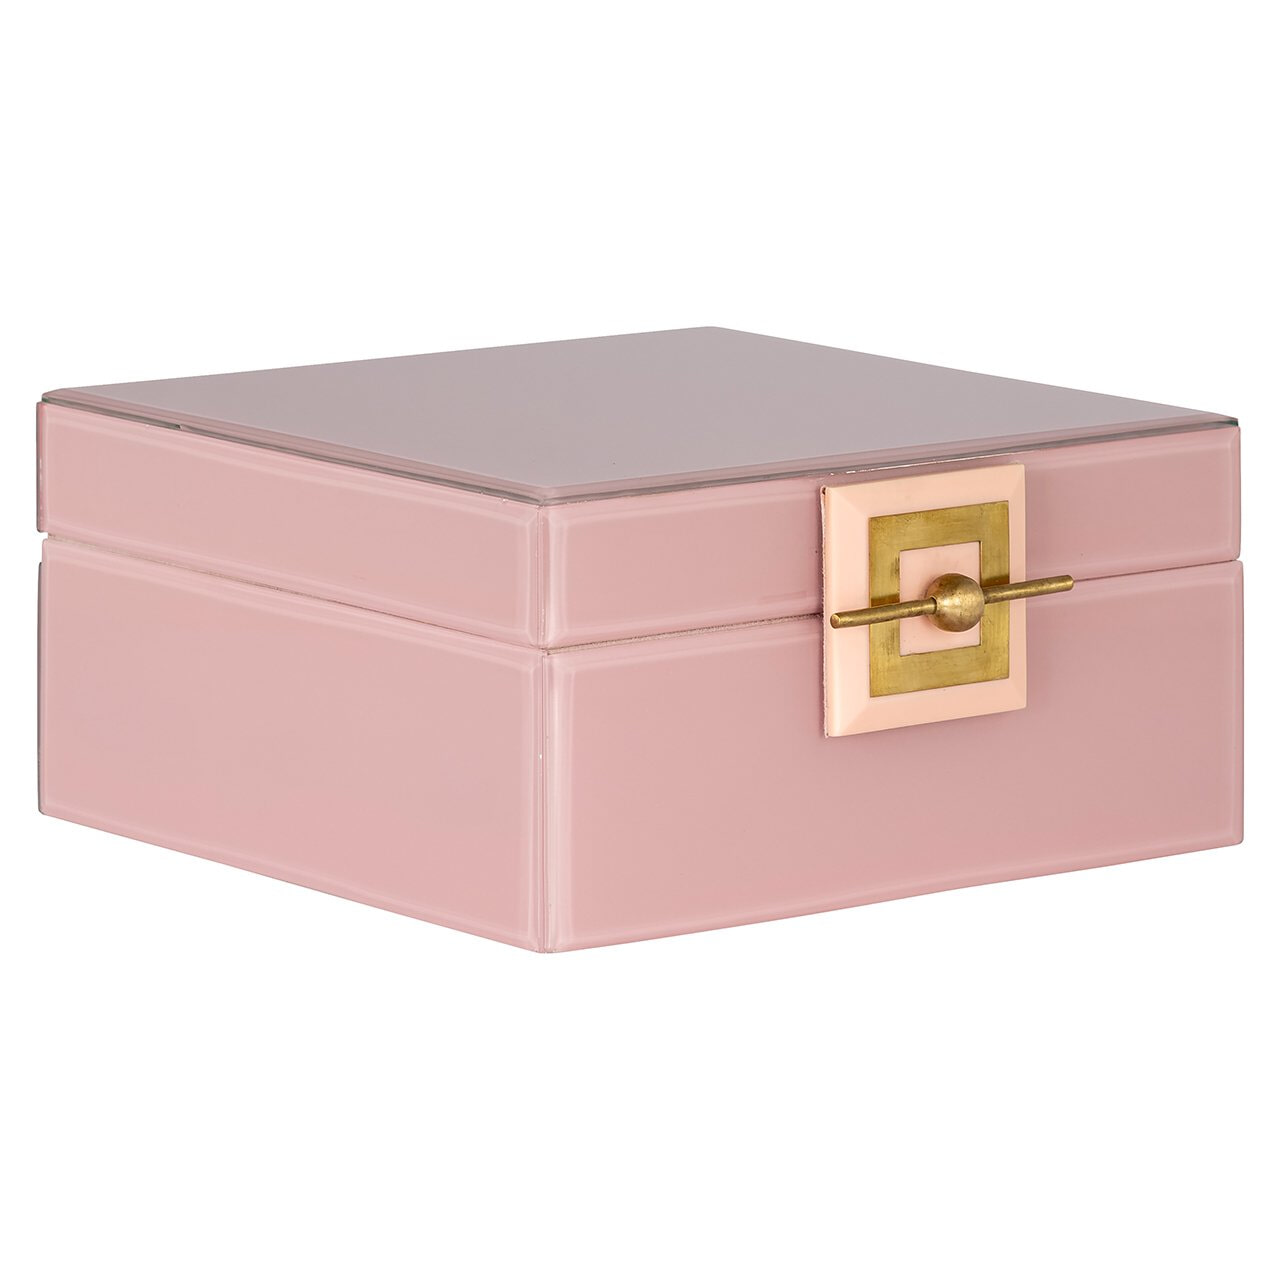 Richmond Juwelenbox Bodine groot - Roze